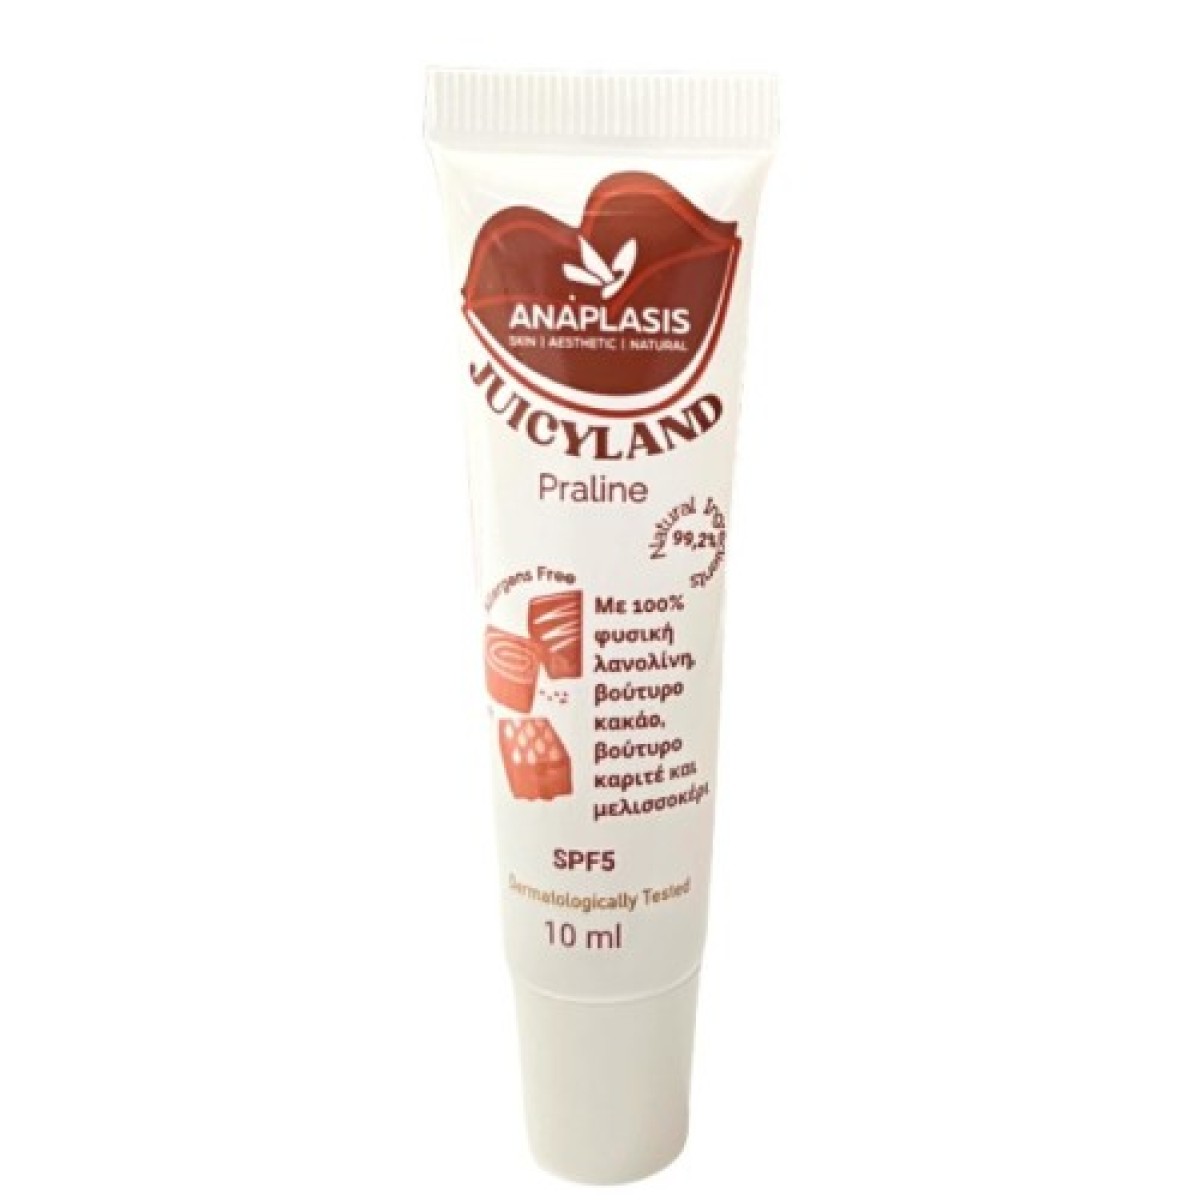 Anaplasis | Juicyland | Ενυδατικό Lip Balm  Praline  SPF5 με Αντηλιακή Προστασία | 10ml